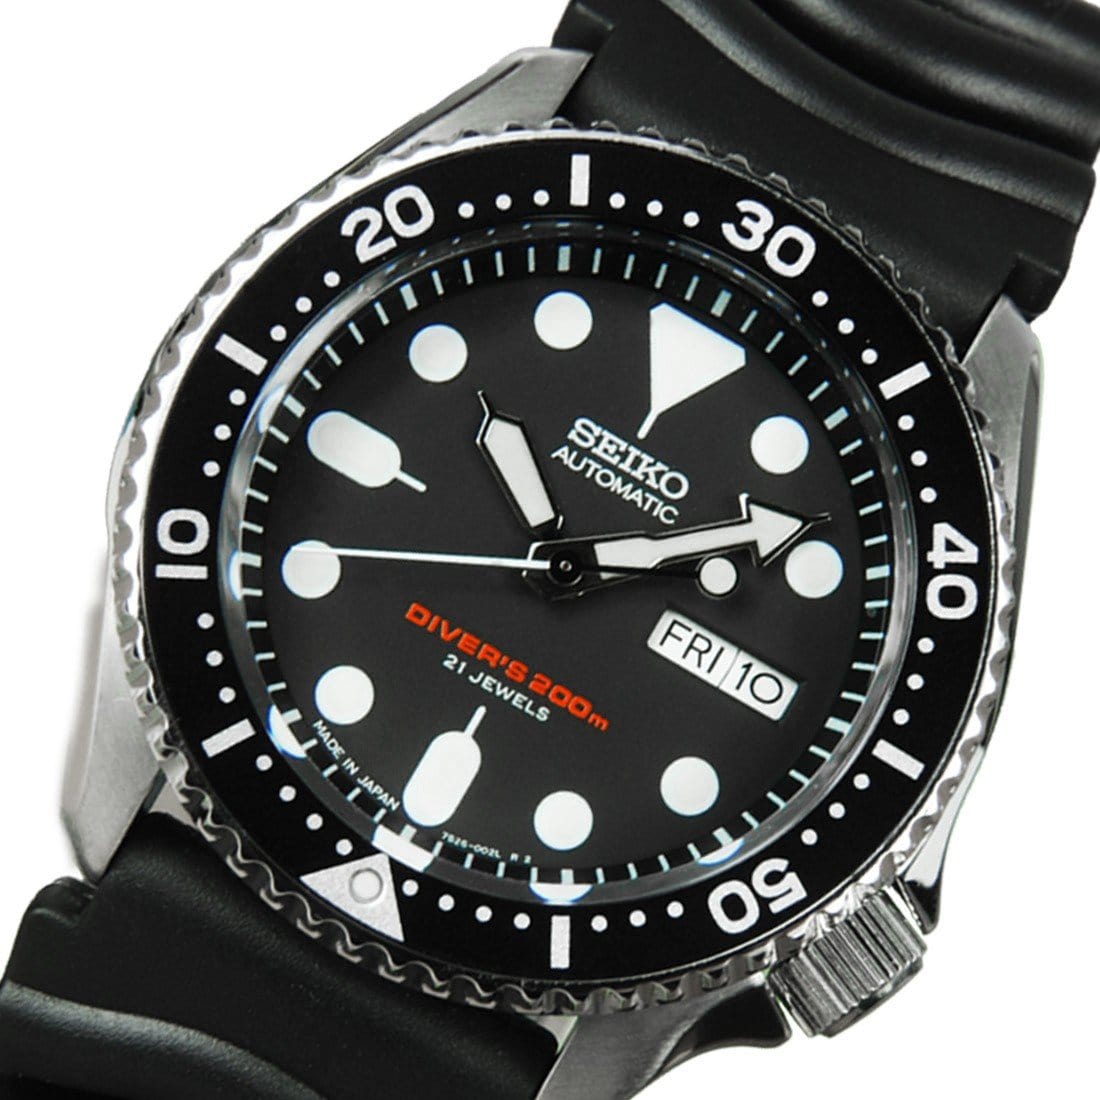 Seiko Japan Automatic Watch SKX007 SKX007J1 with Leather Strap